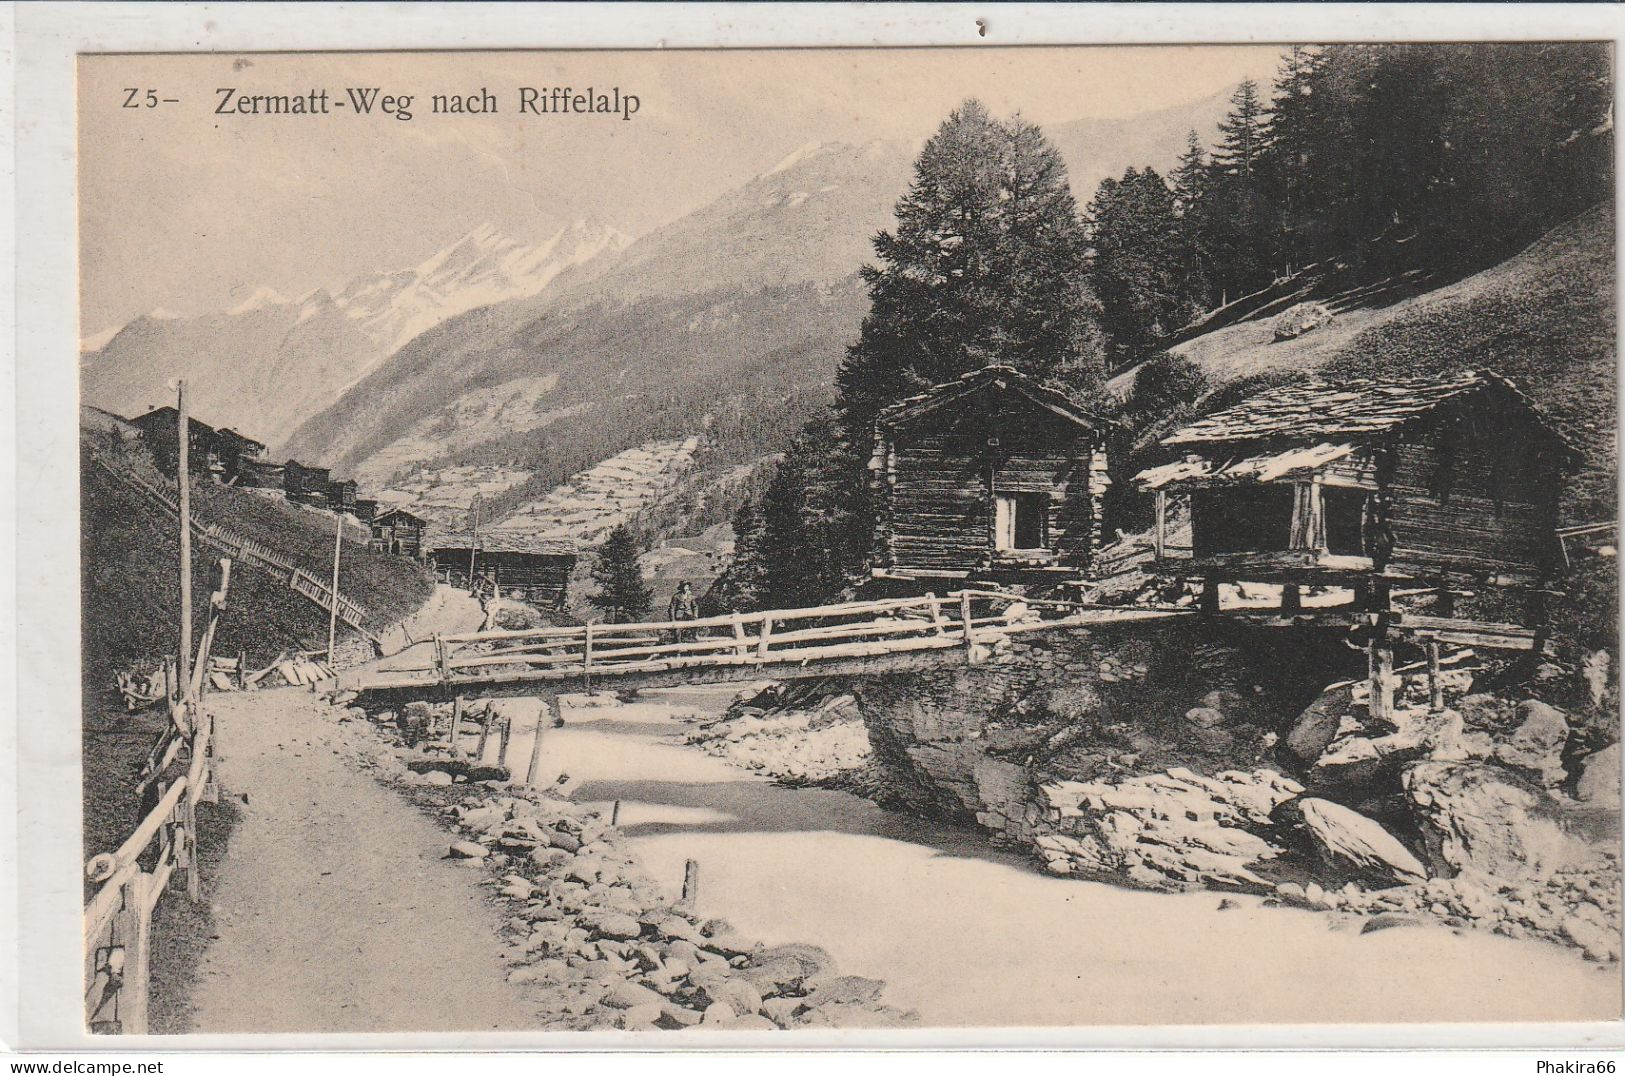 ZEMATT-WEG NACH RIFFELWALD - Zermatt